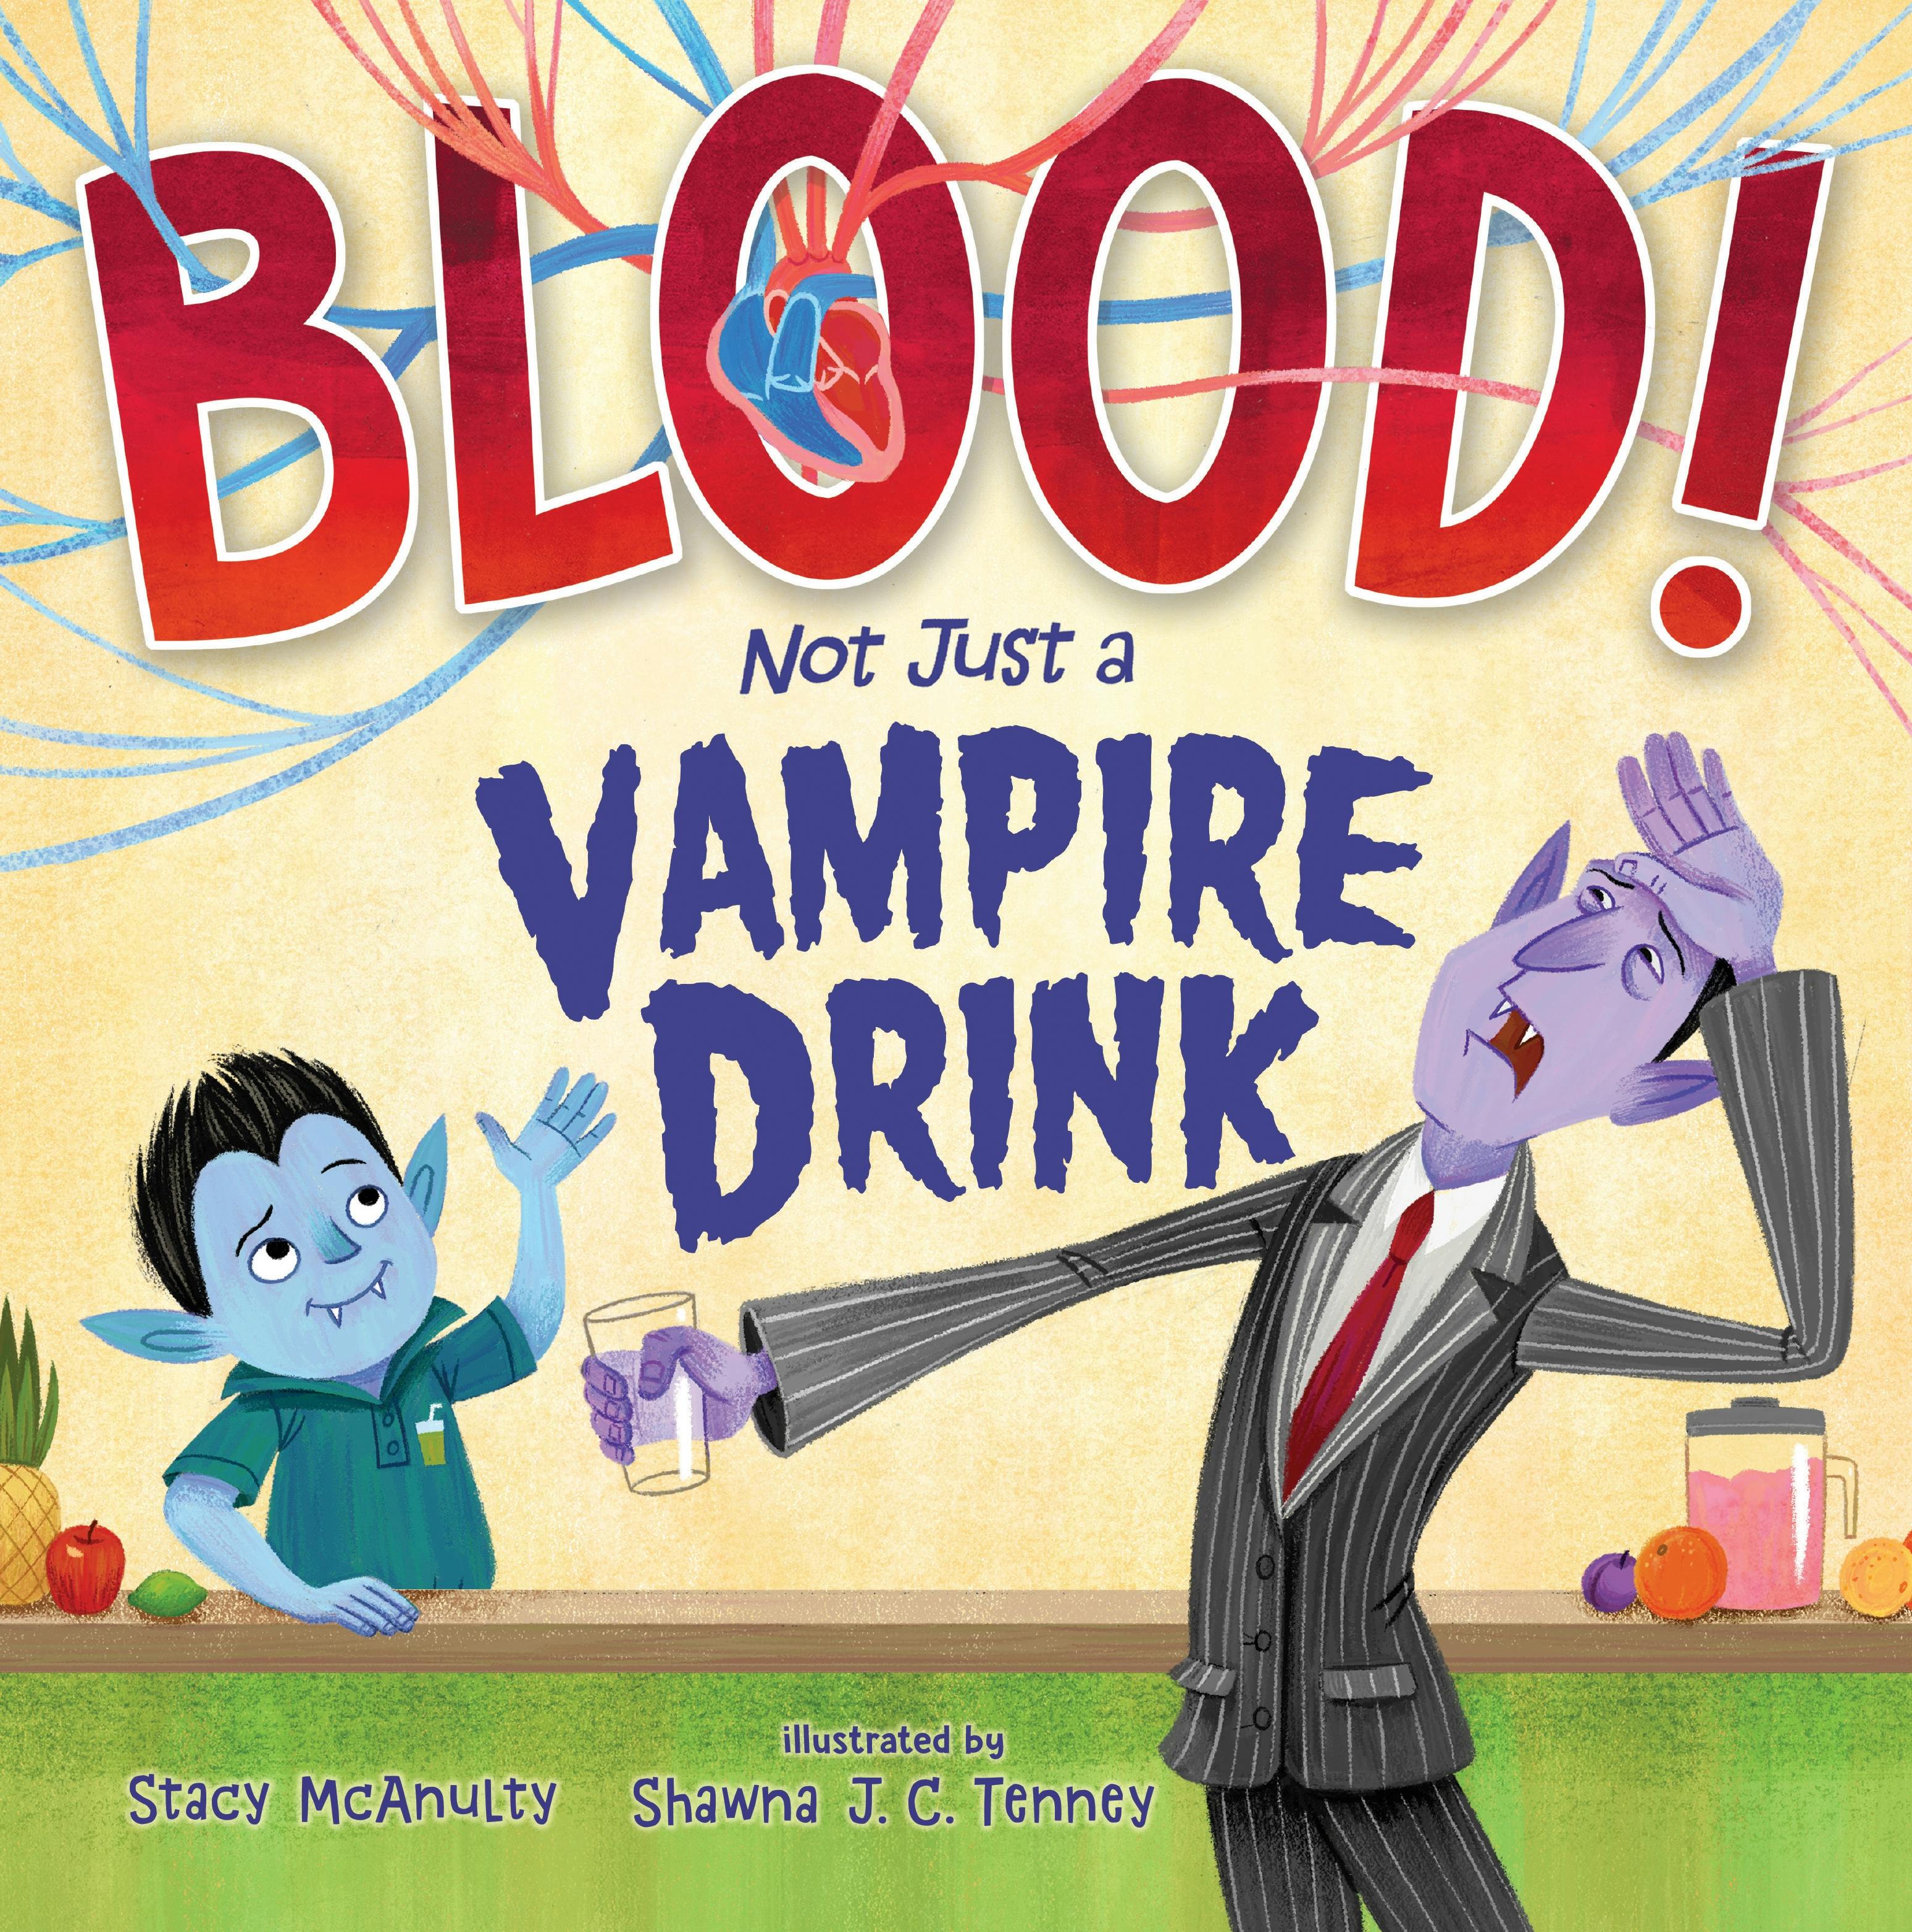 vampire blood drink